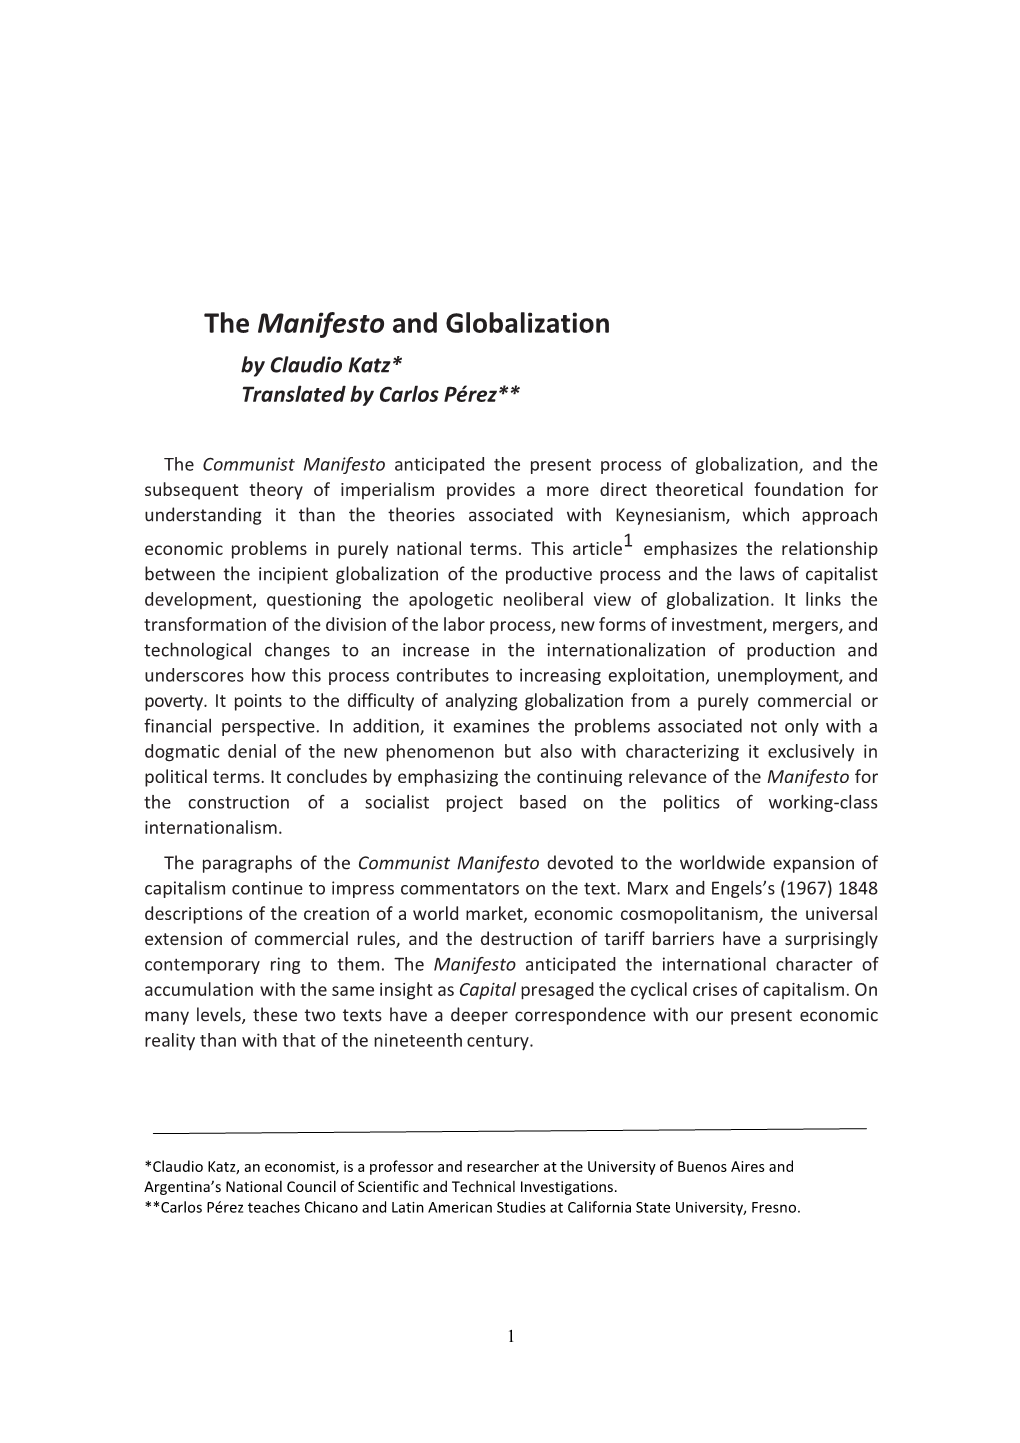 The Manifesto and Globalization by Claudio Katz* Translated by Carlos Pérez**